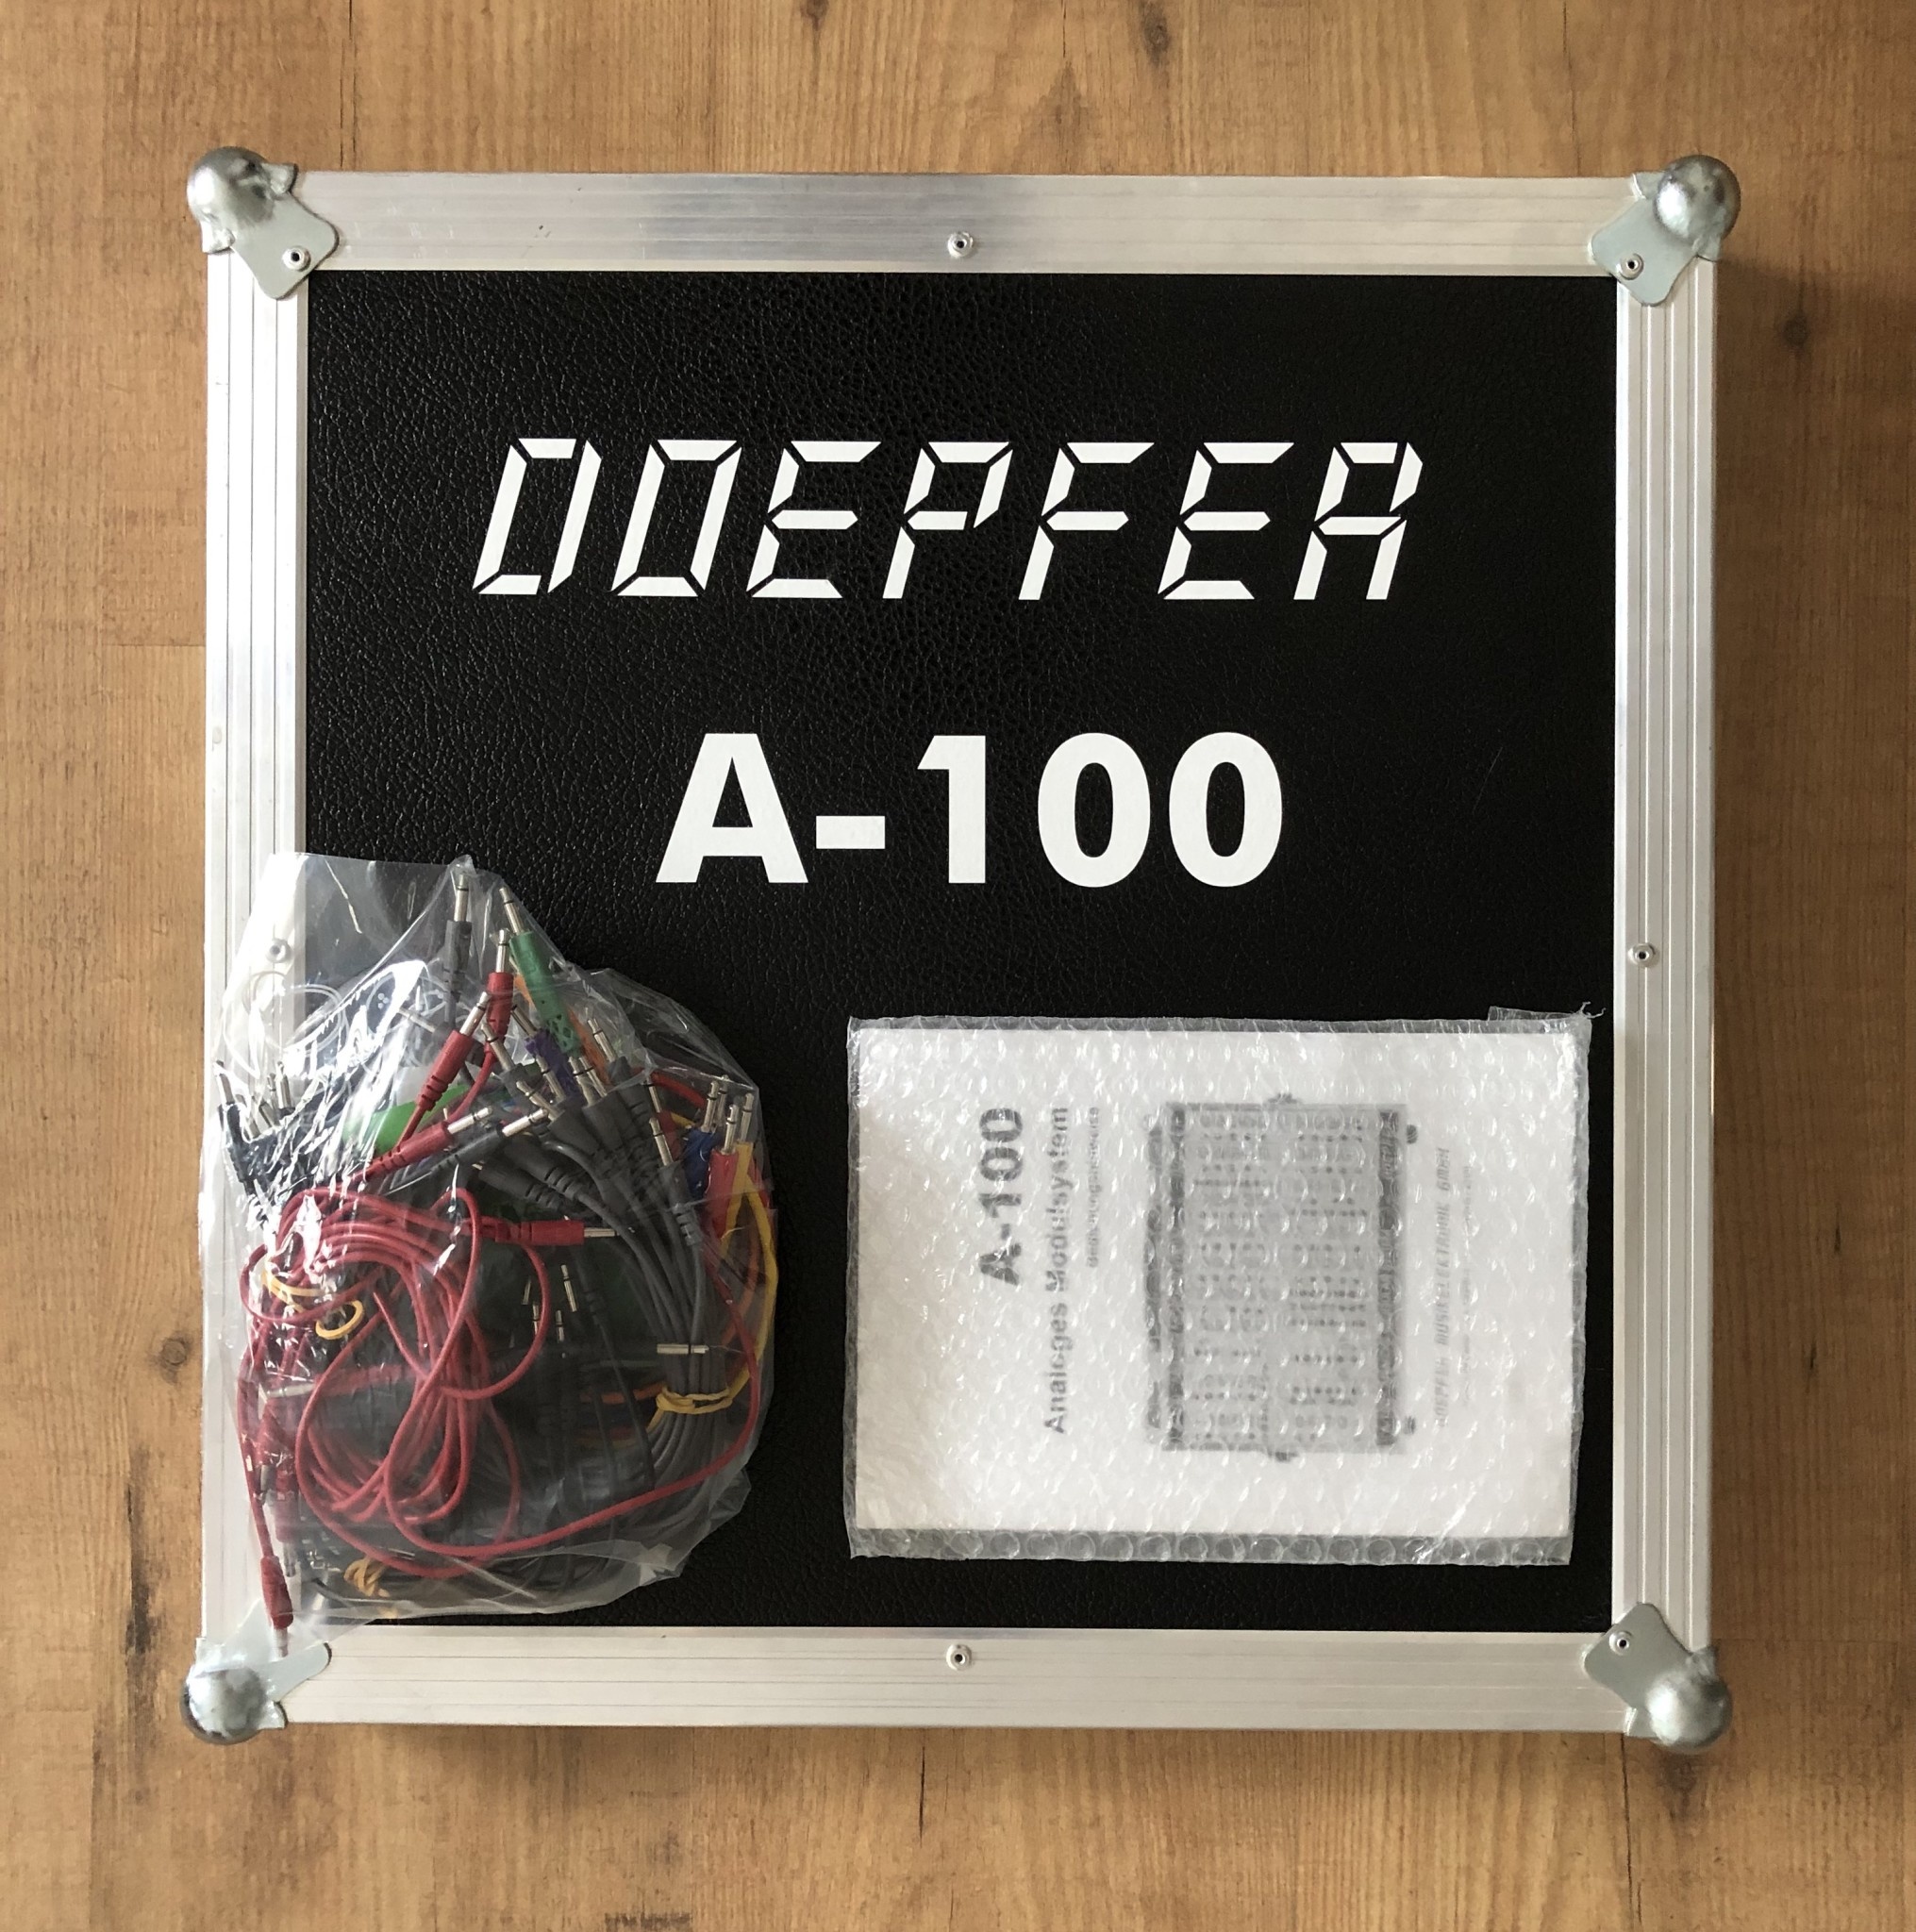 Doepfer A-100BS2-P9 PSU3 - Turnlab